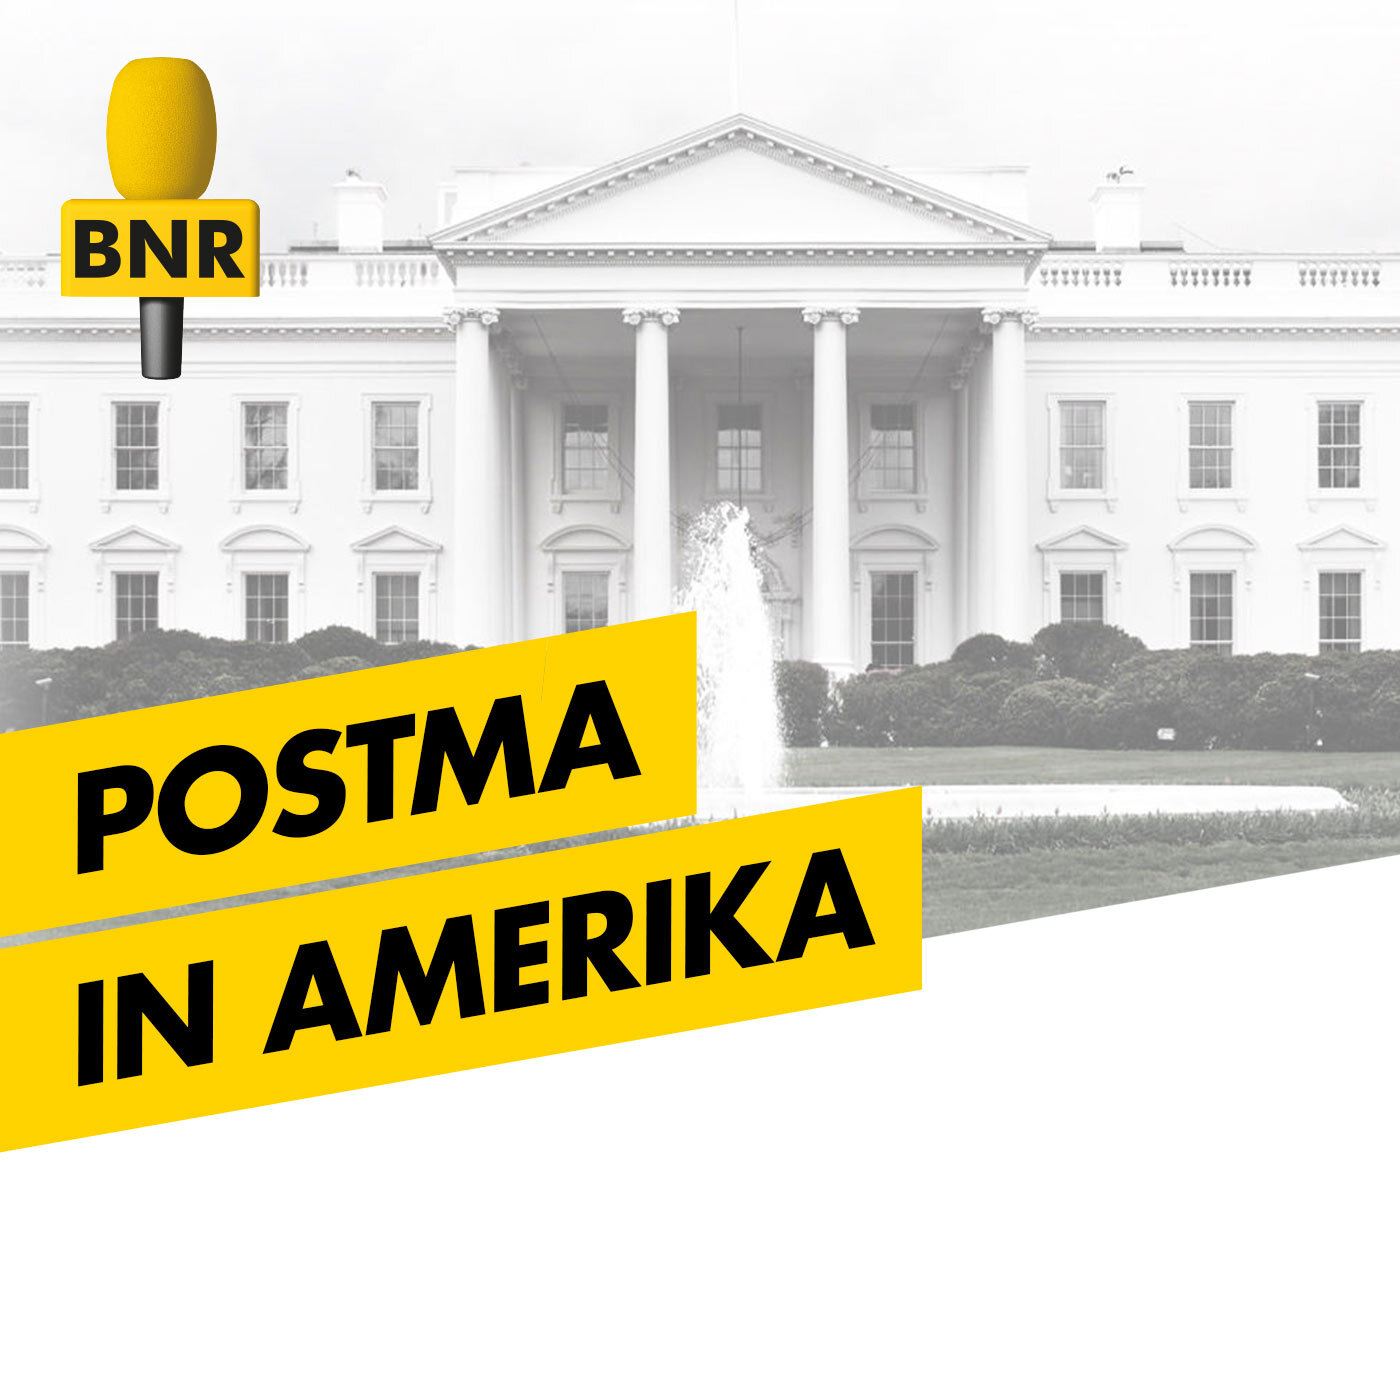 Postma in Amerika | Nikki Haley for president?